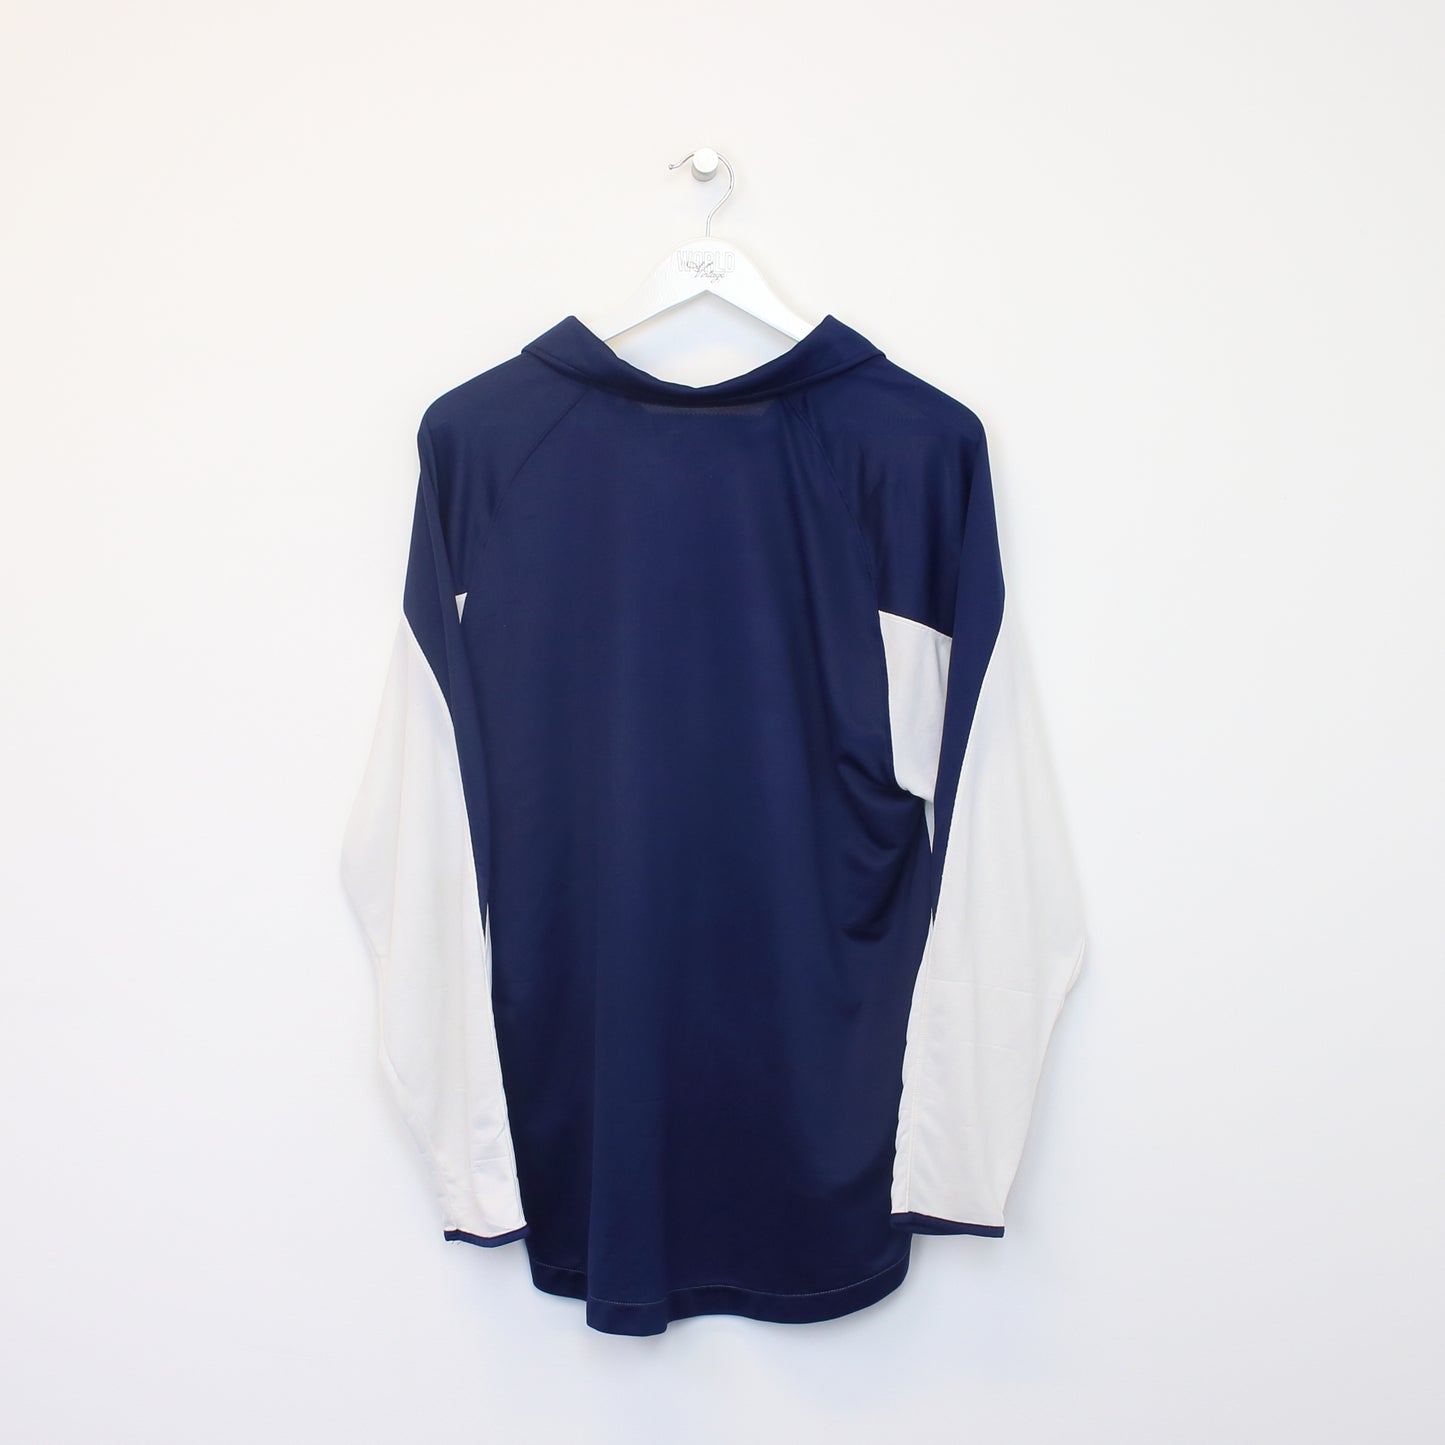 Vintage Hummel Yokohama FC 2000s Home bootleg football shirt in white and blue. Best fits L